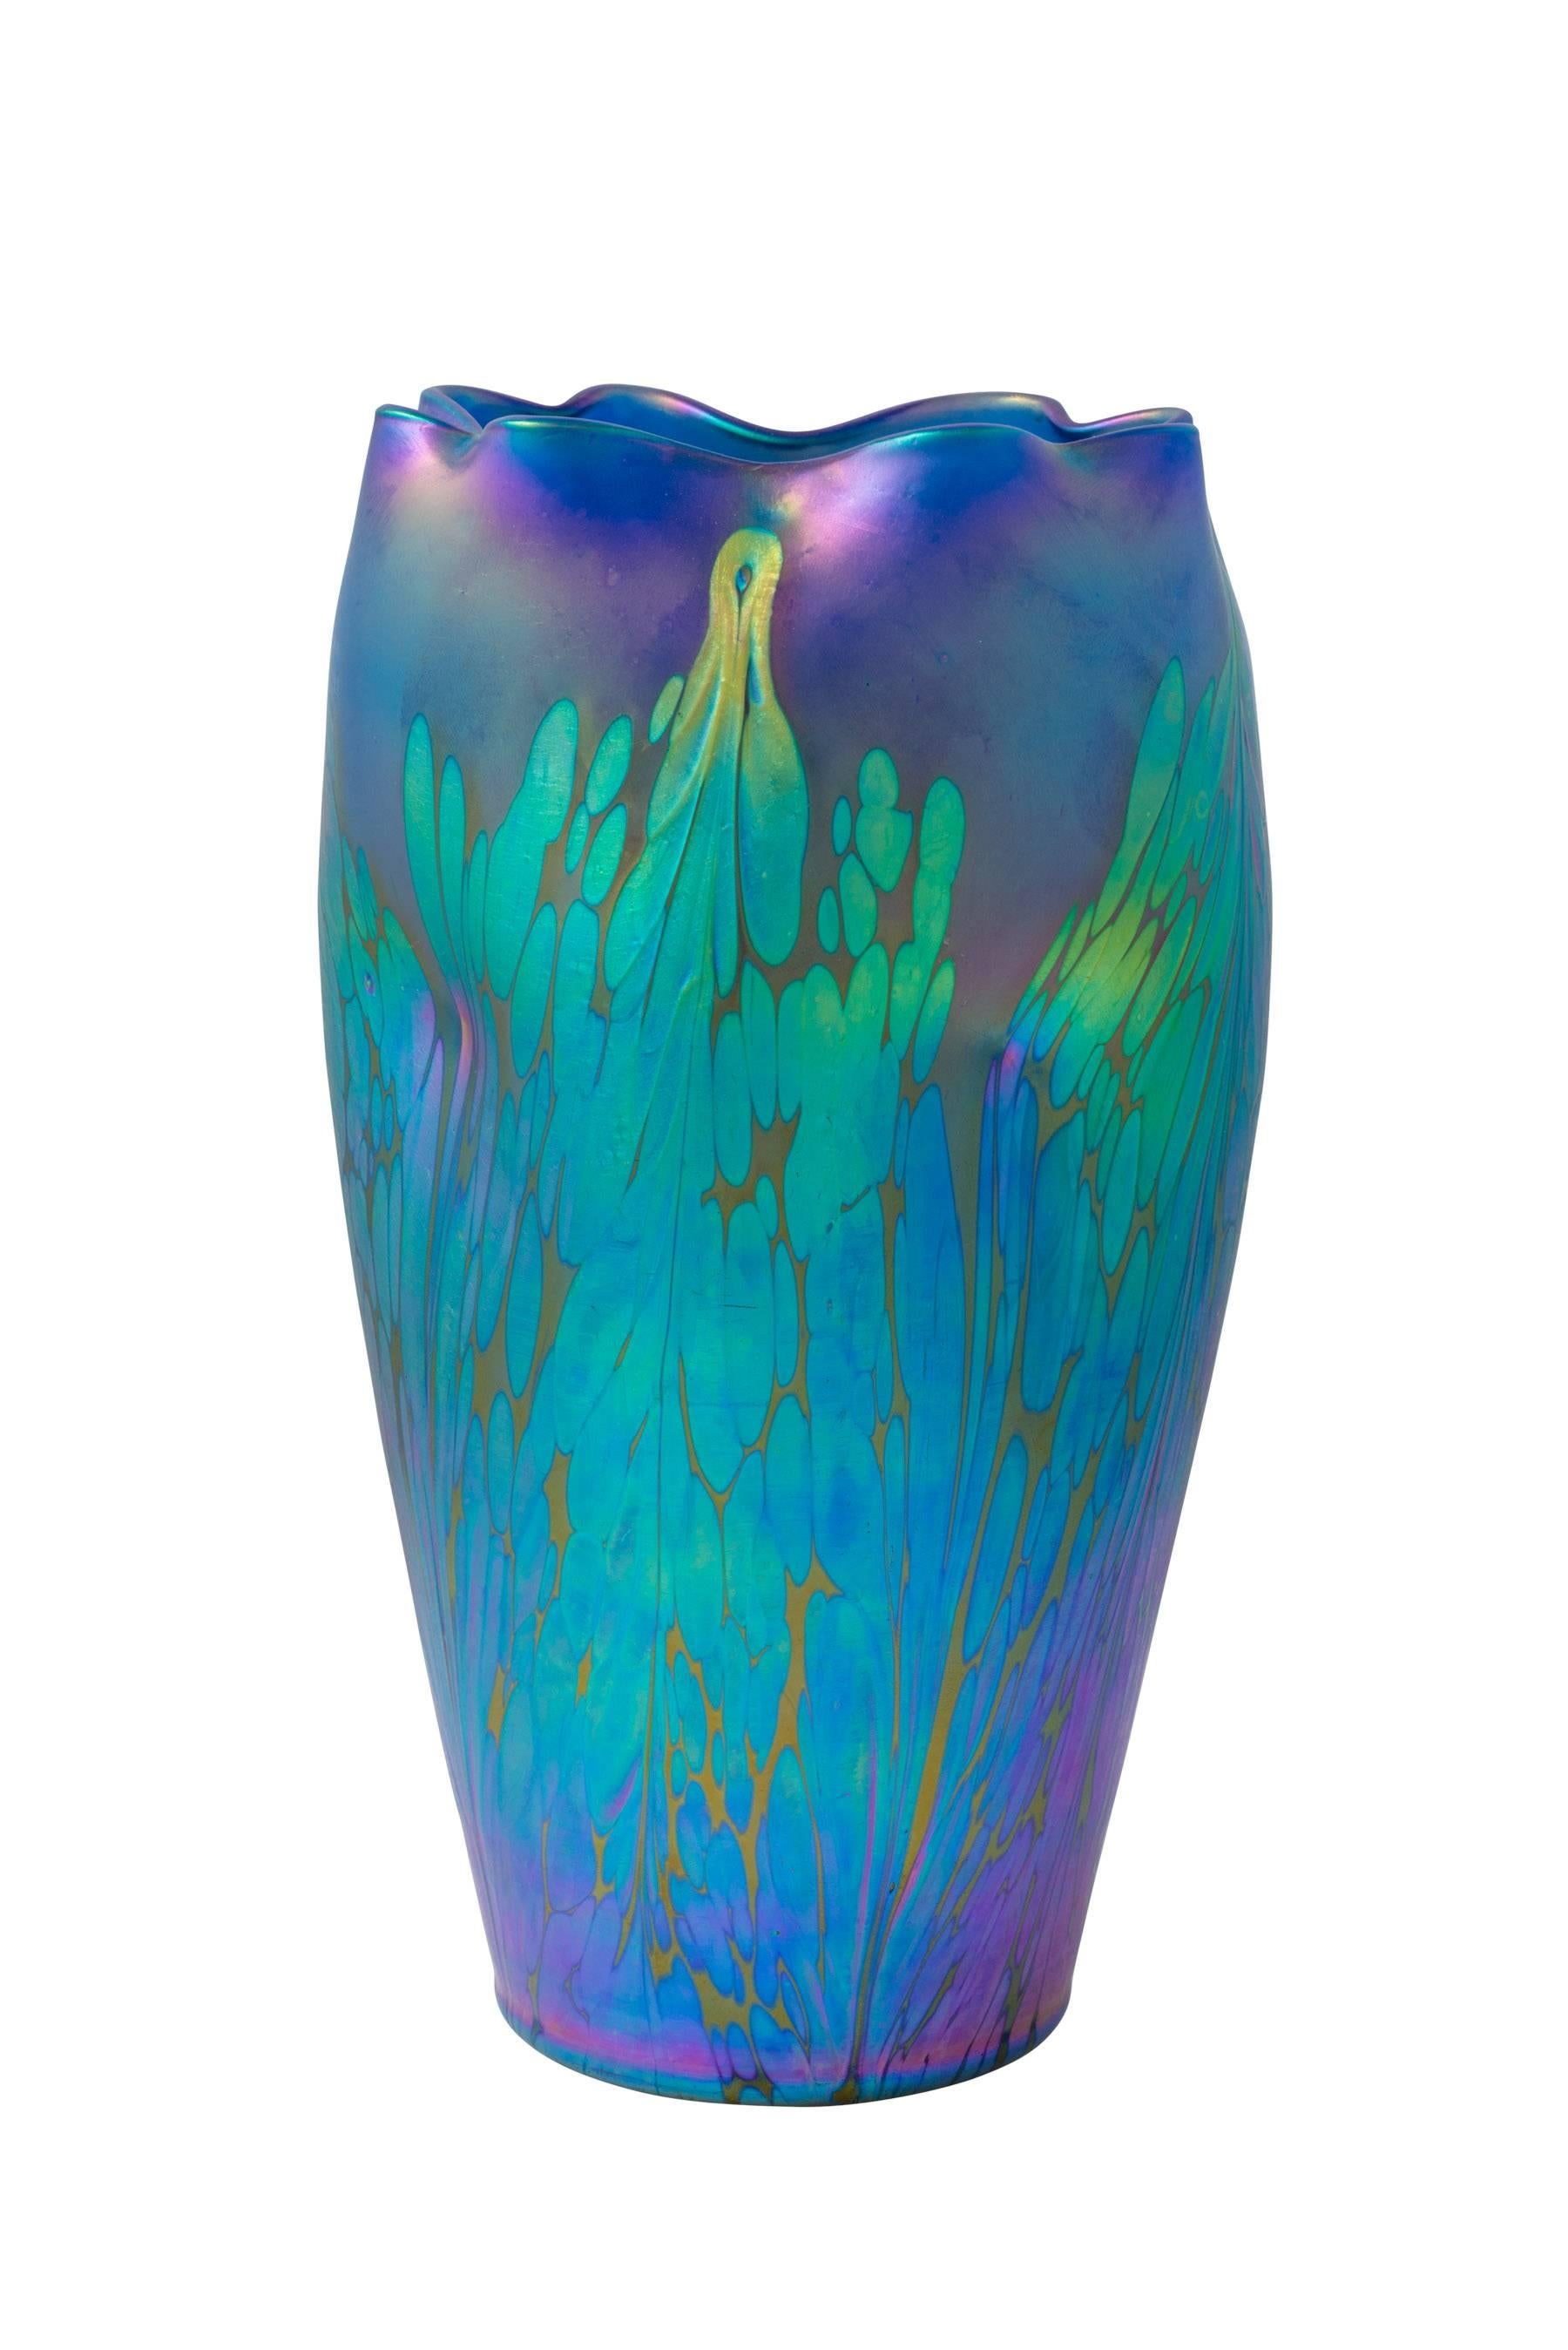 Early 20th Century Loetz Mouthblown Glass Vase Phenomen 2/484 